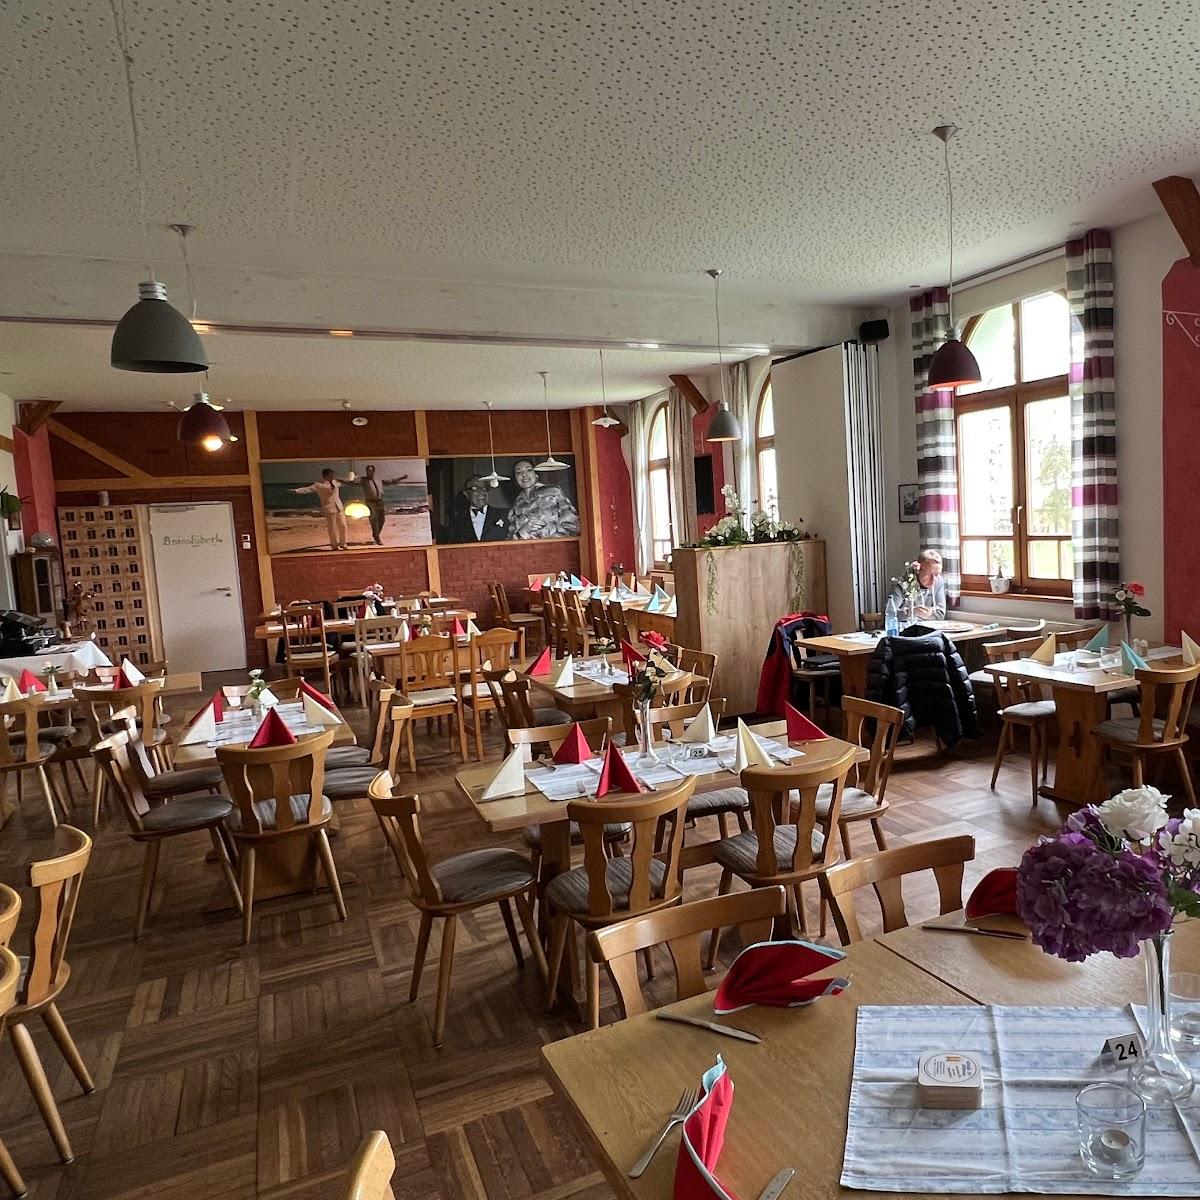 Restaurant "Restaurant Kreta" in Bayreuth